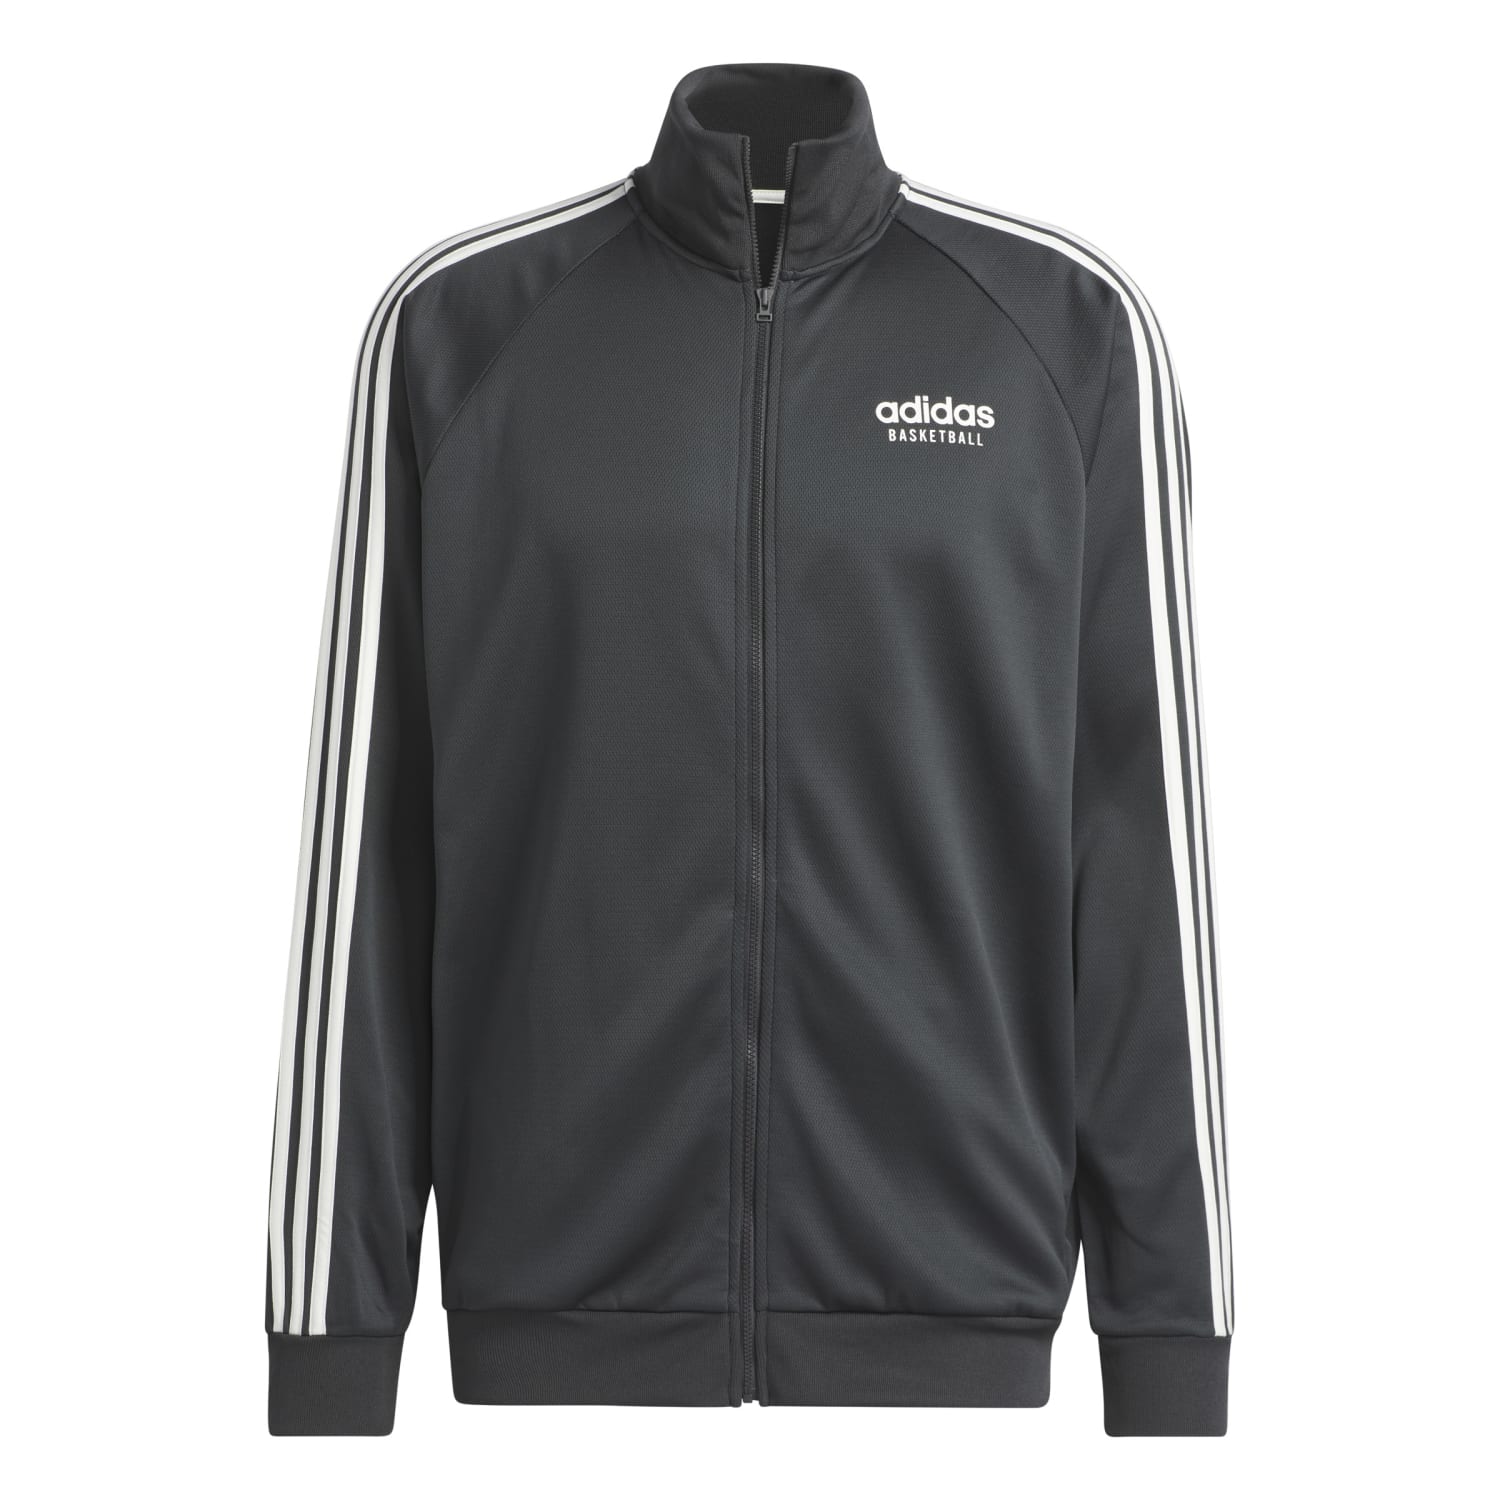 adidas basketball men select jacket grey il2189 857